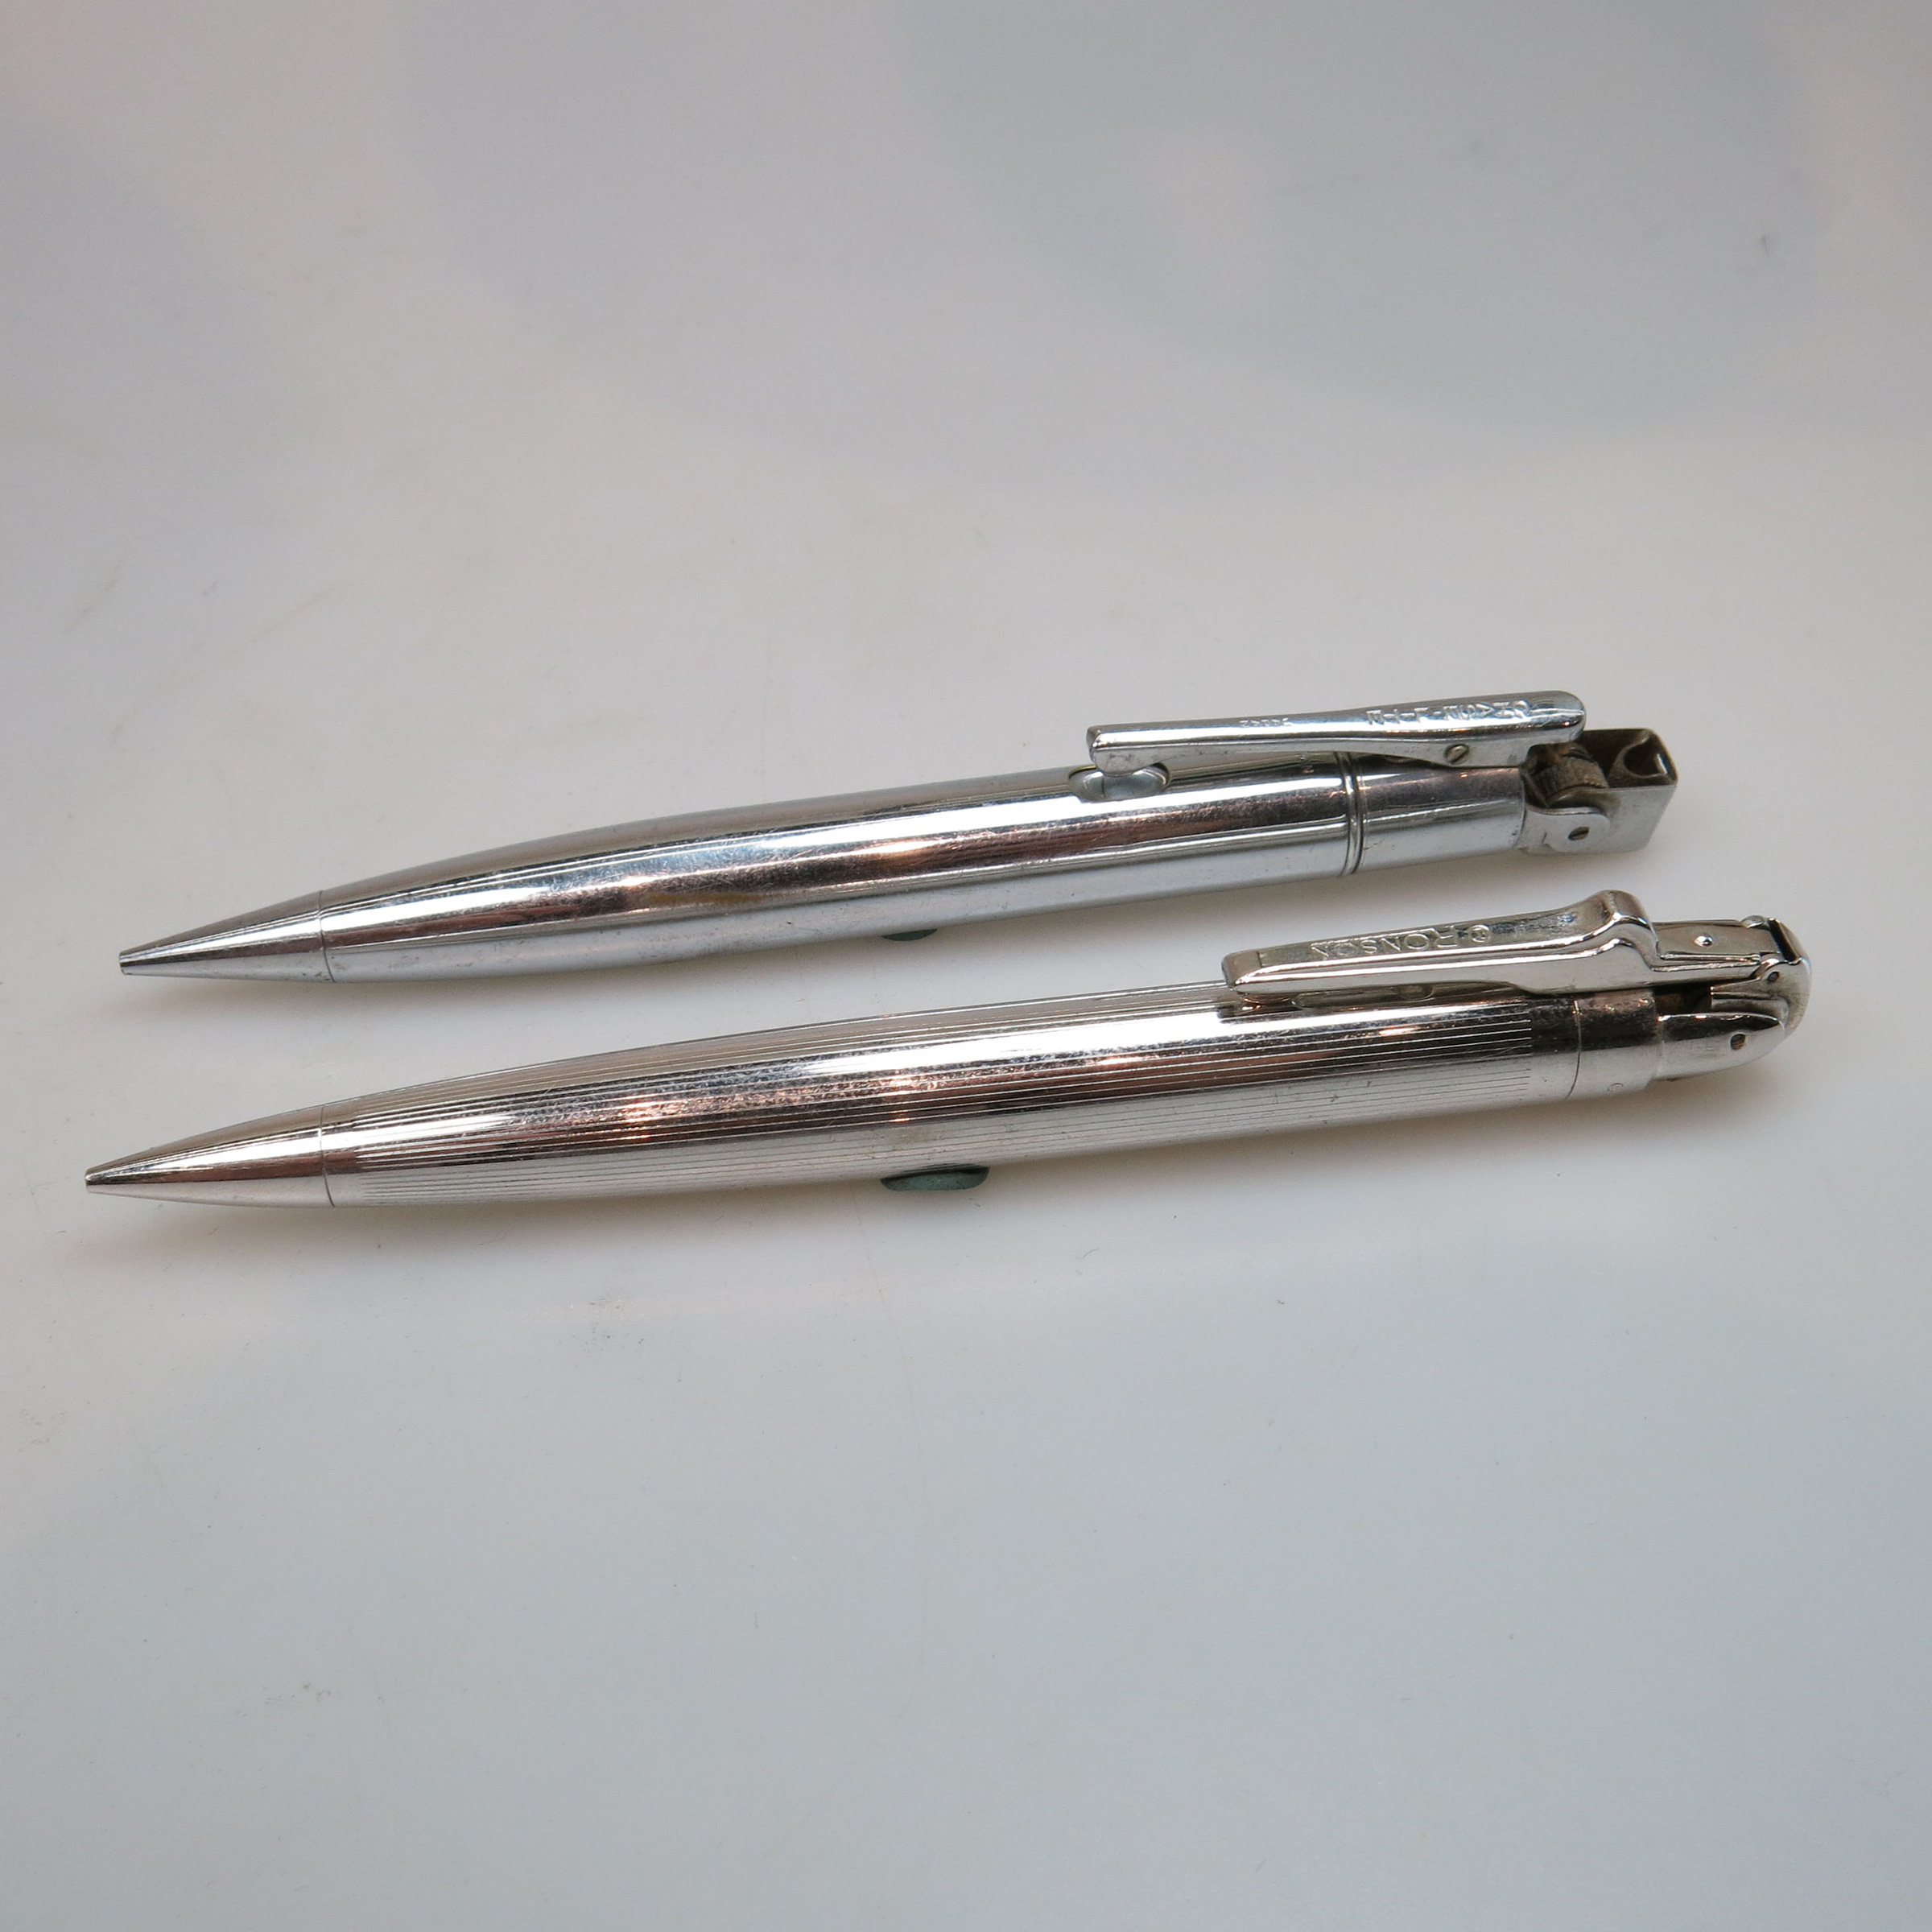 2 Lighter/Pencil Combinations